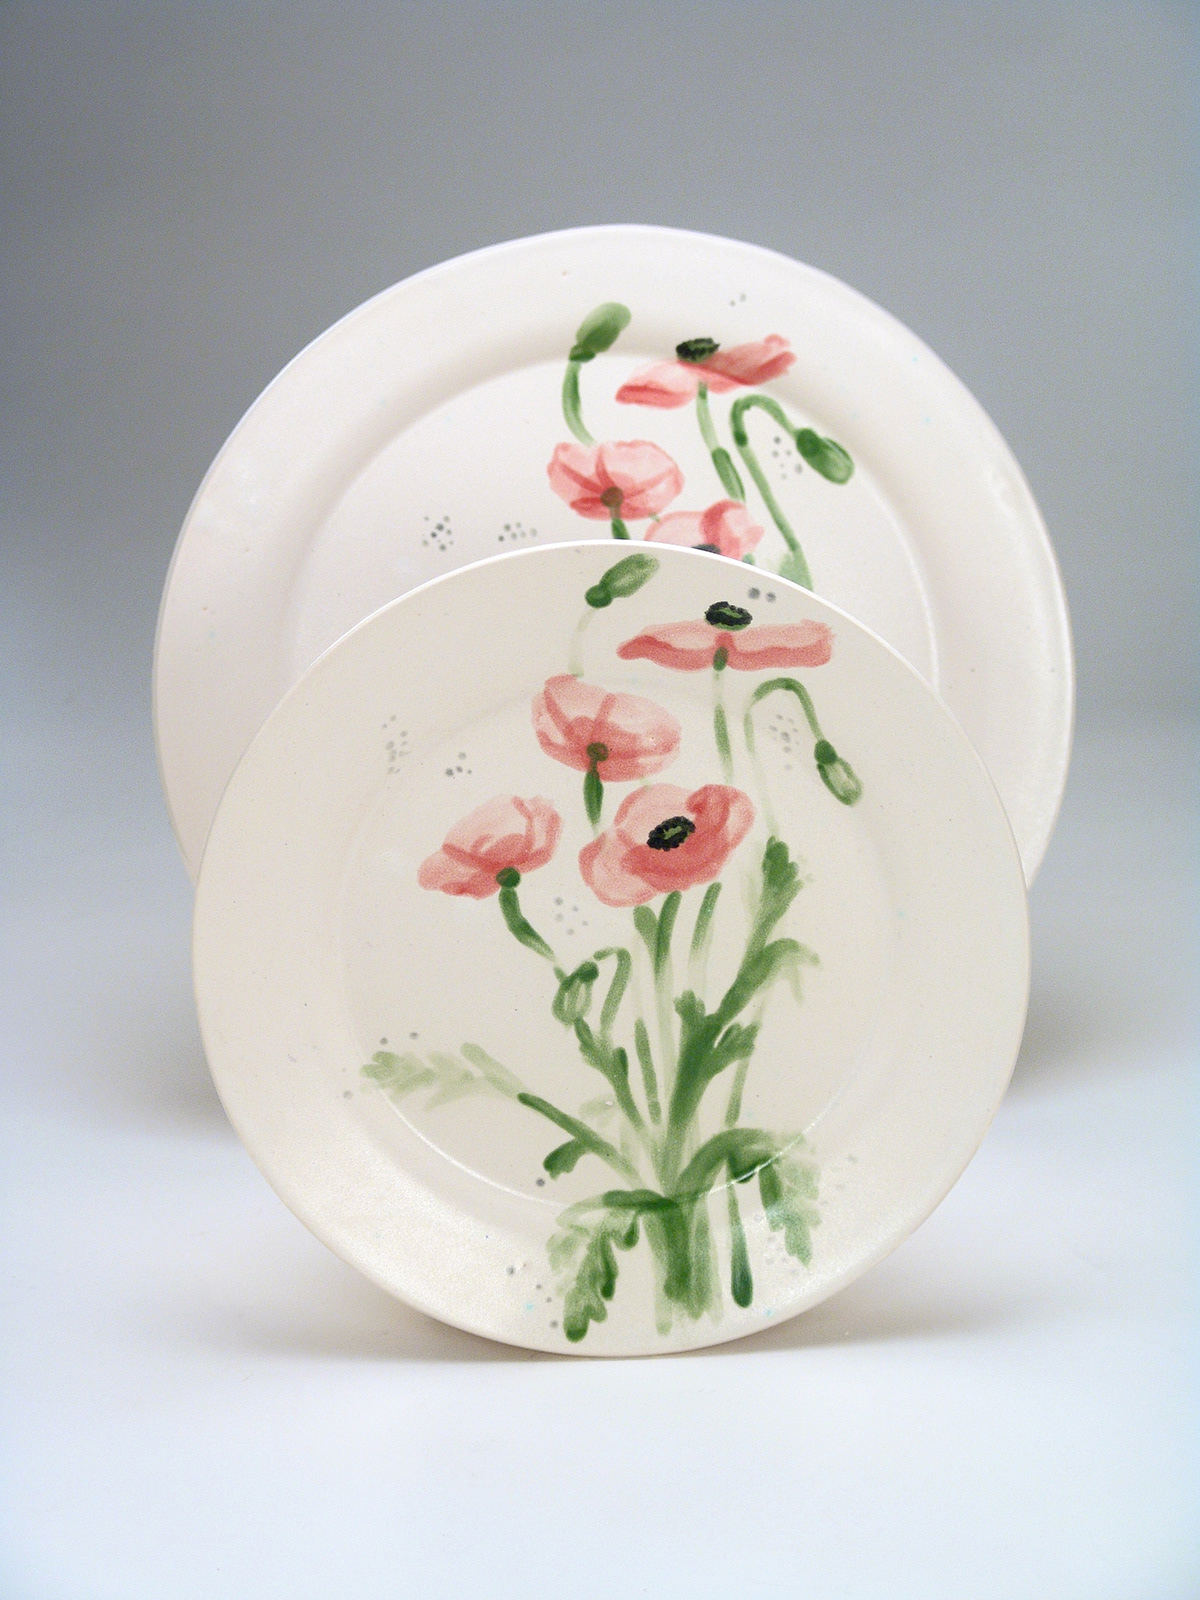 poppy poppies Flowers plate plates bowls bowl serving dish jiggering jigger